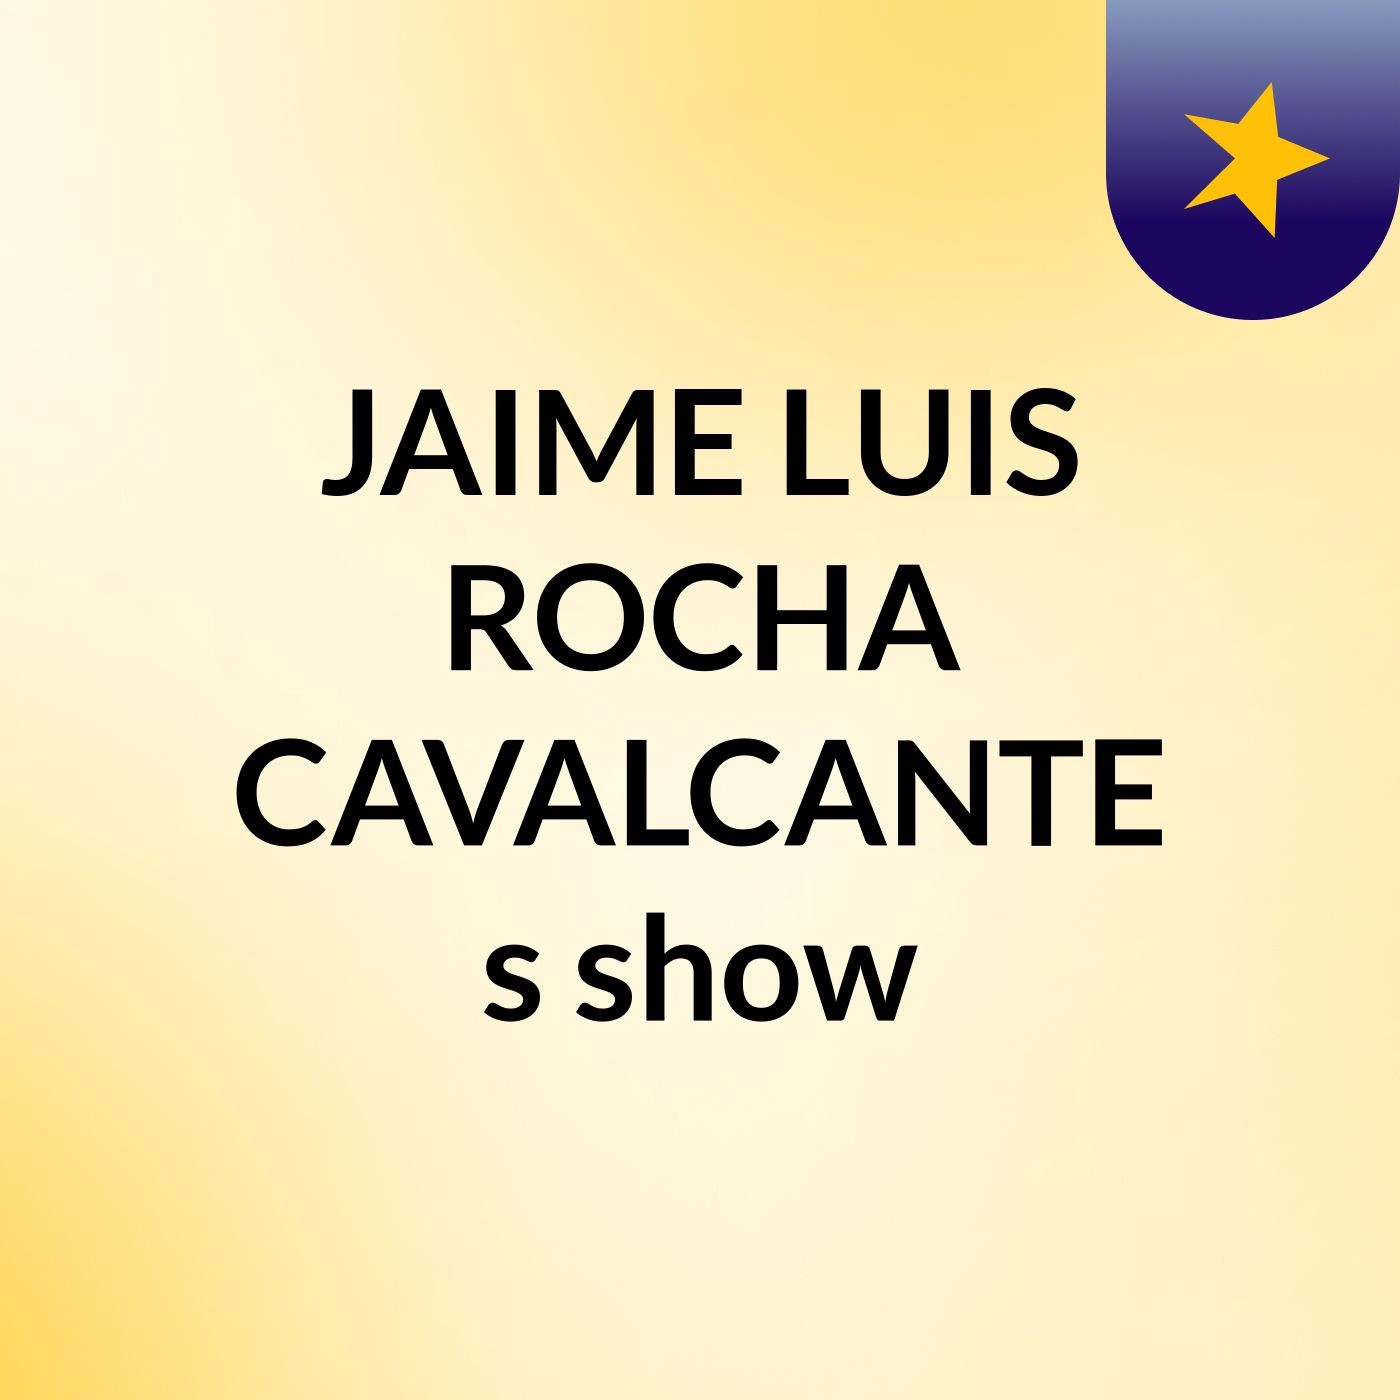 JAIME LUIS ROCHA CAVALCANTE's show